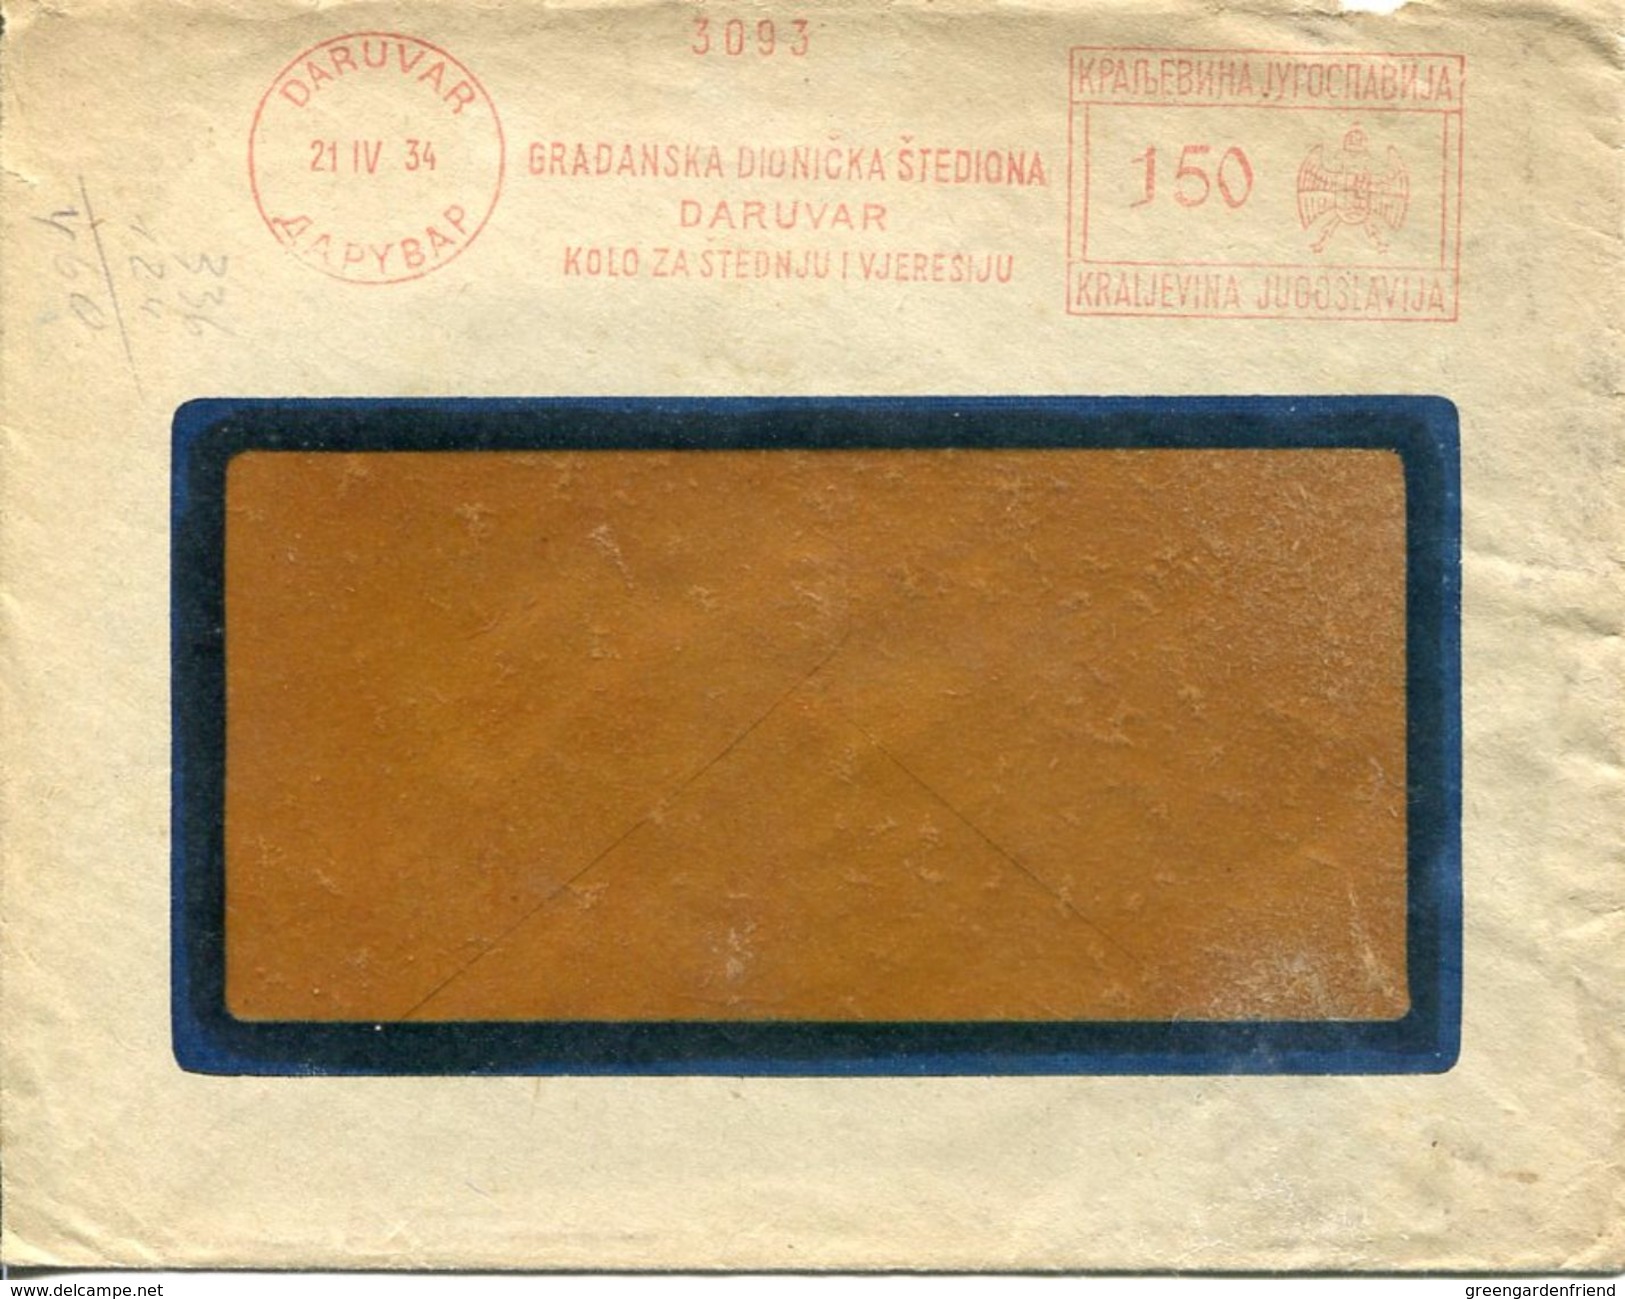 26055 Jugoslavia, Red Meter/freistempel/ema/ 1934 Daruvar Gradanska Dionicka Stediona, Circuled Cover - Covers & Documents